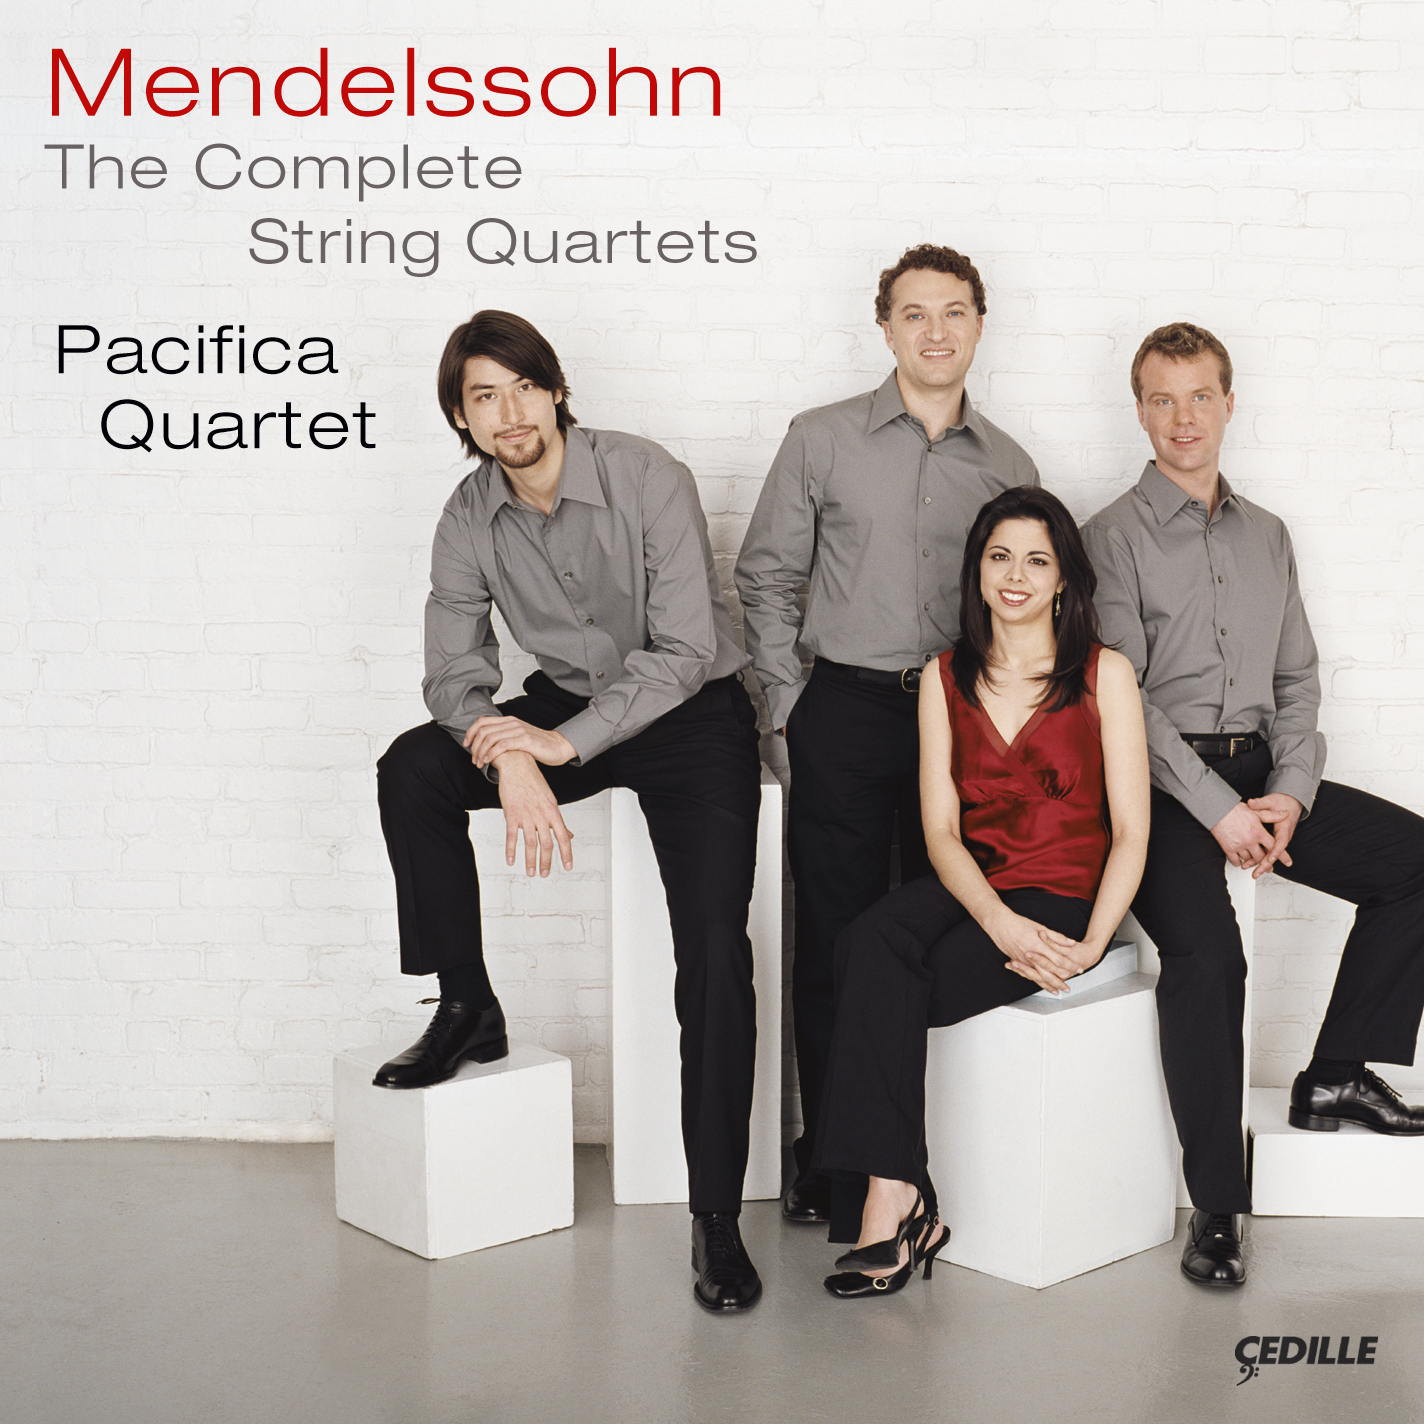 Mendelssohn: The Complete String Quartets | Cedille Records